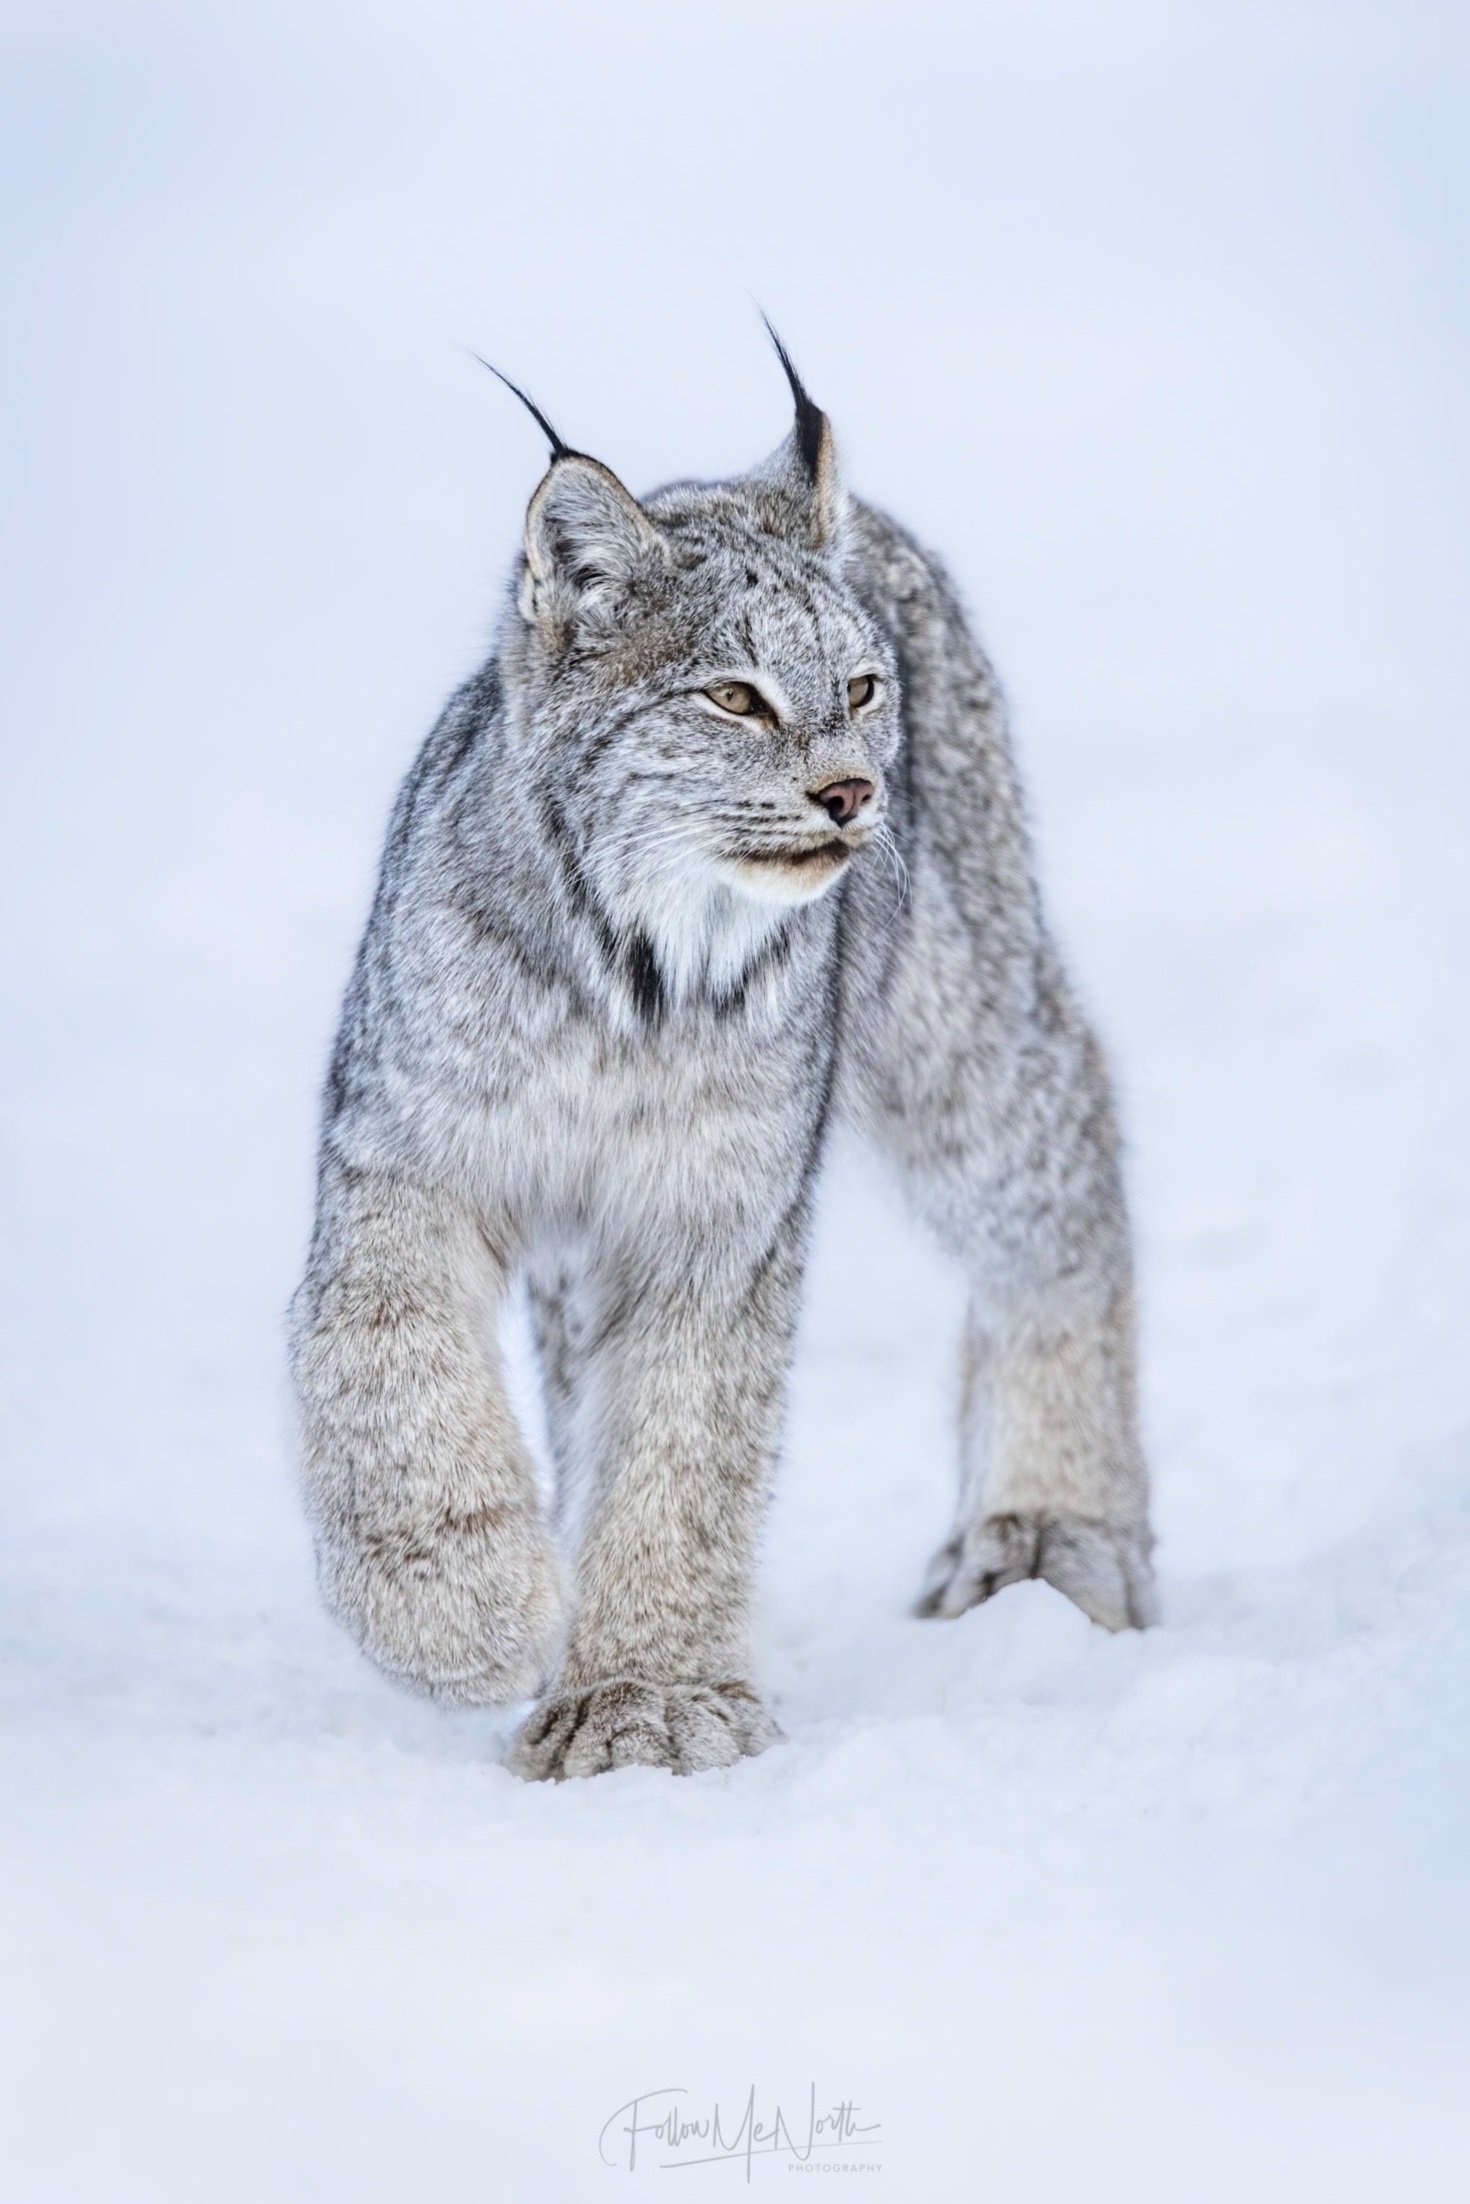 Part 2: Canada Lynx Quest Continued — Follow Me North